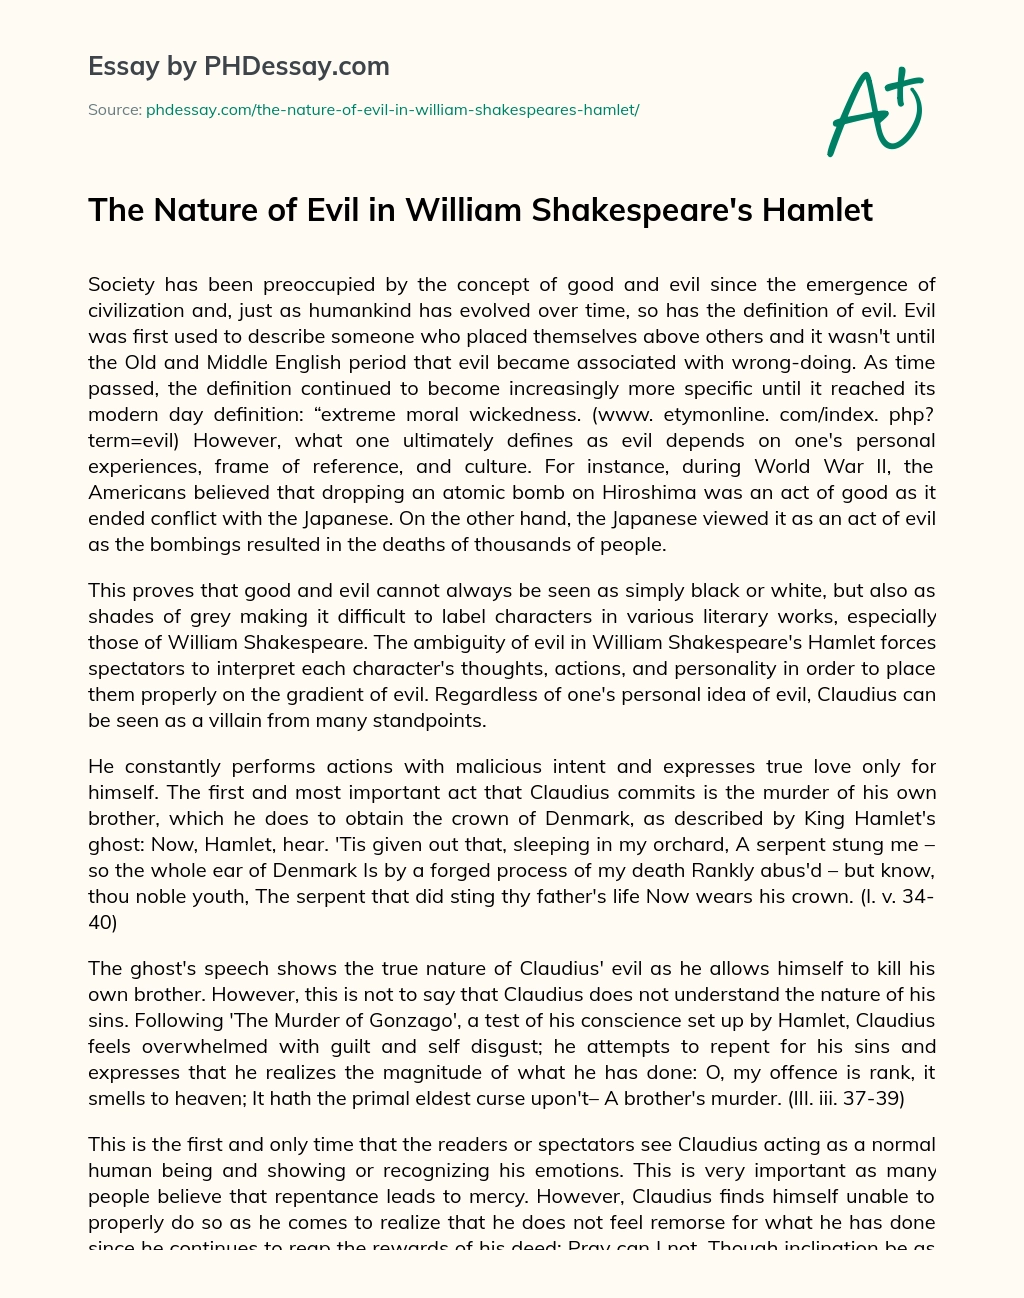 The Nature of Evil in William Shakespeare’s Hamlet essay